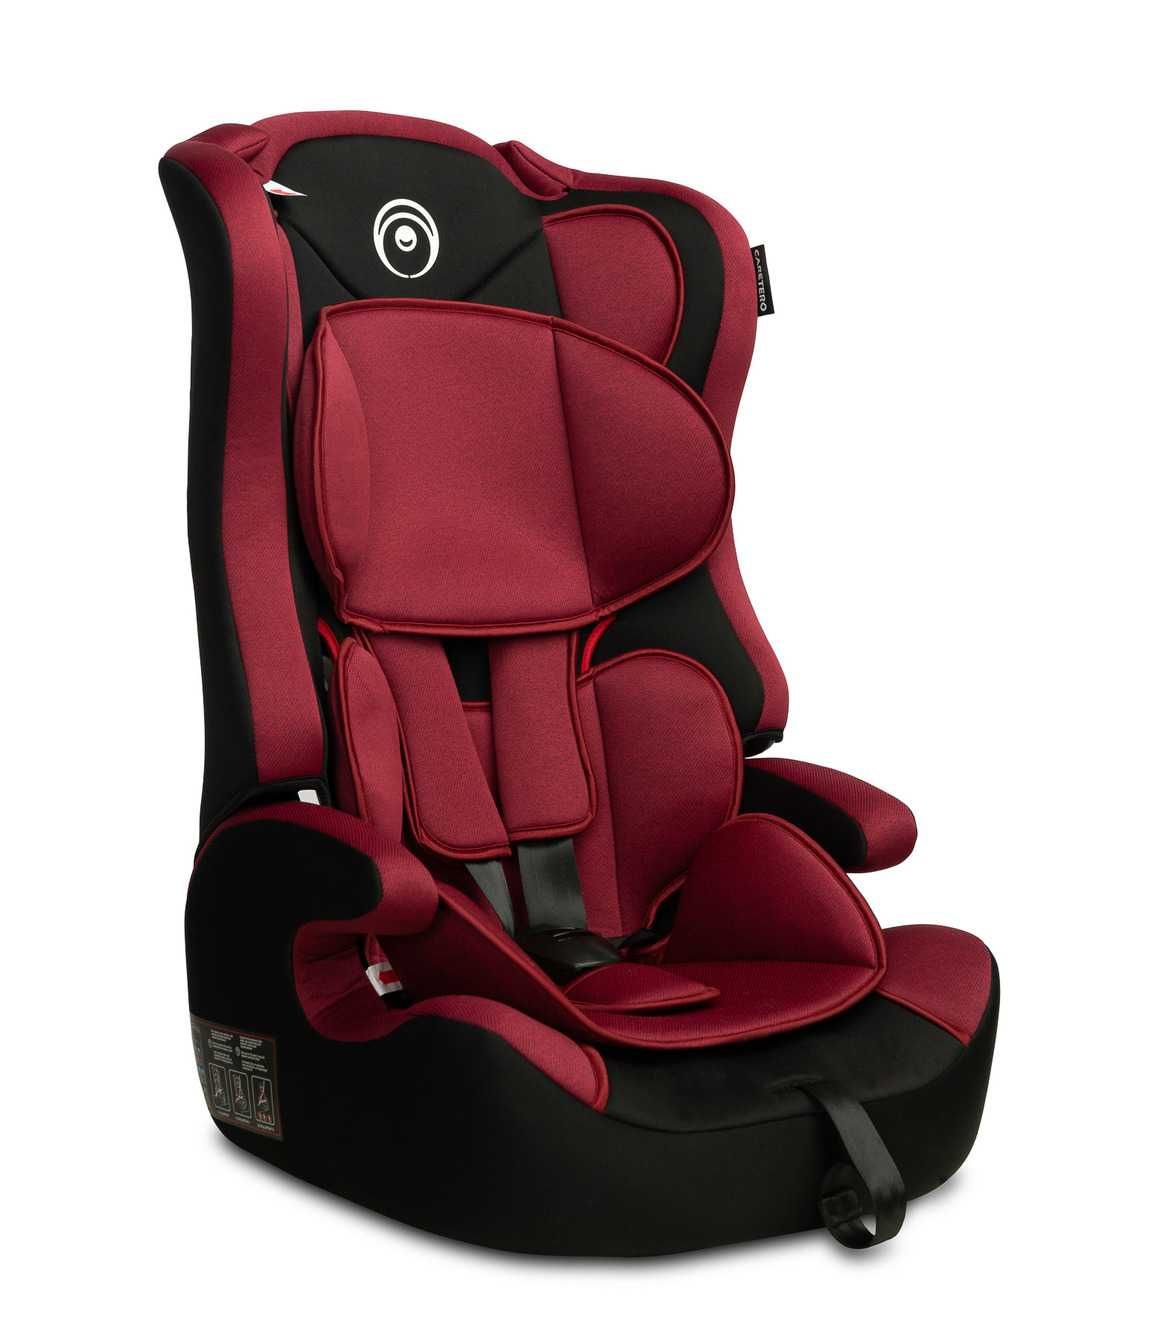 samochodowy fotelik VIVO Fresh 9-36 dla dziecka